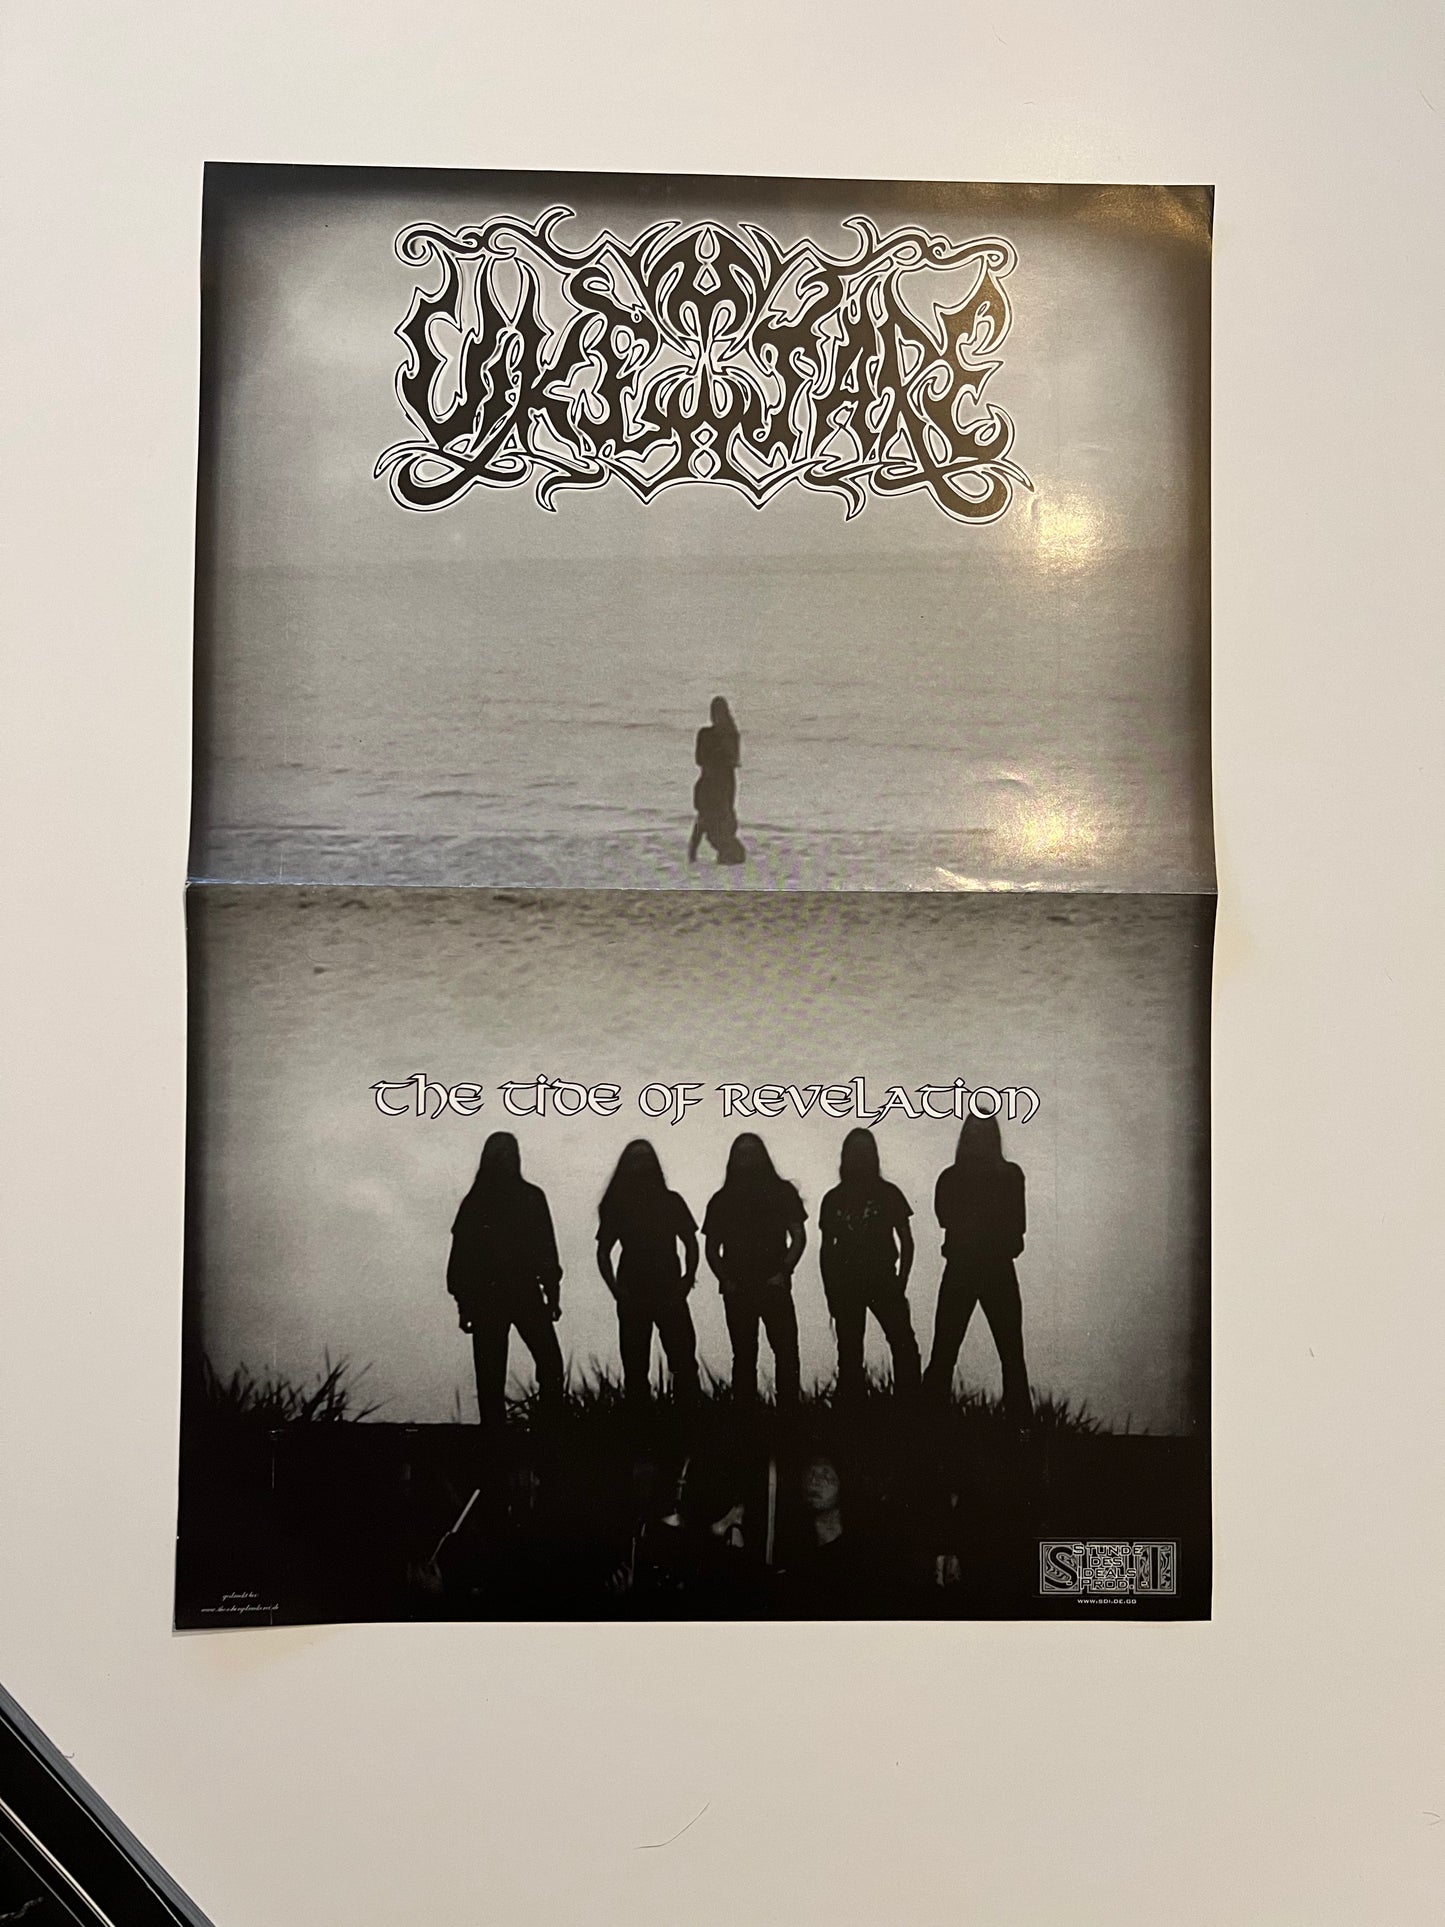 German. Rare Black Metal Fanzine and Compilation cd